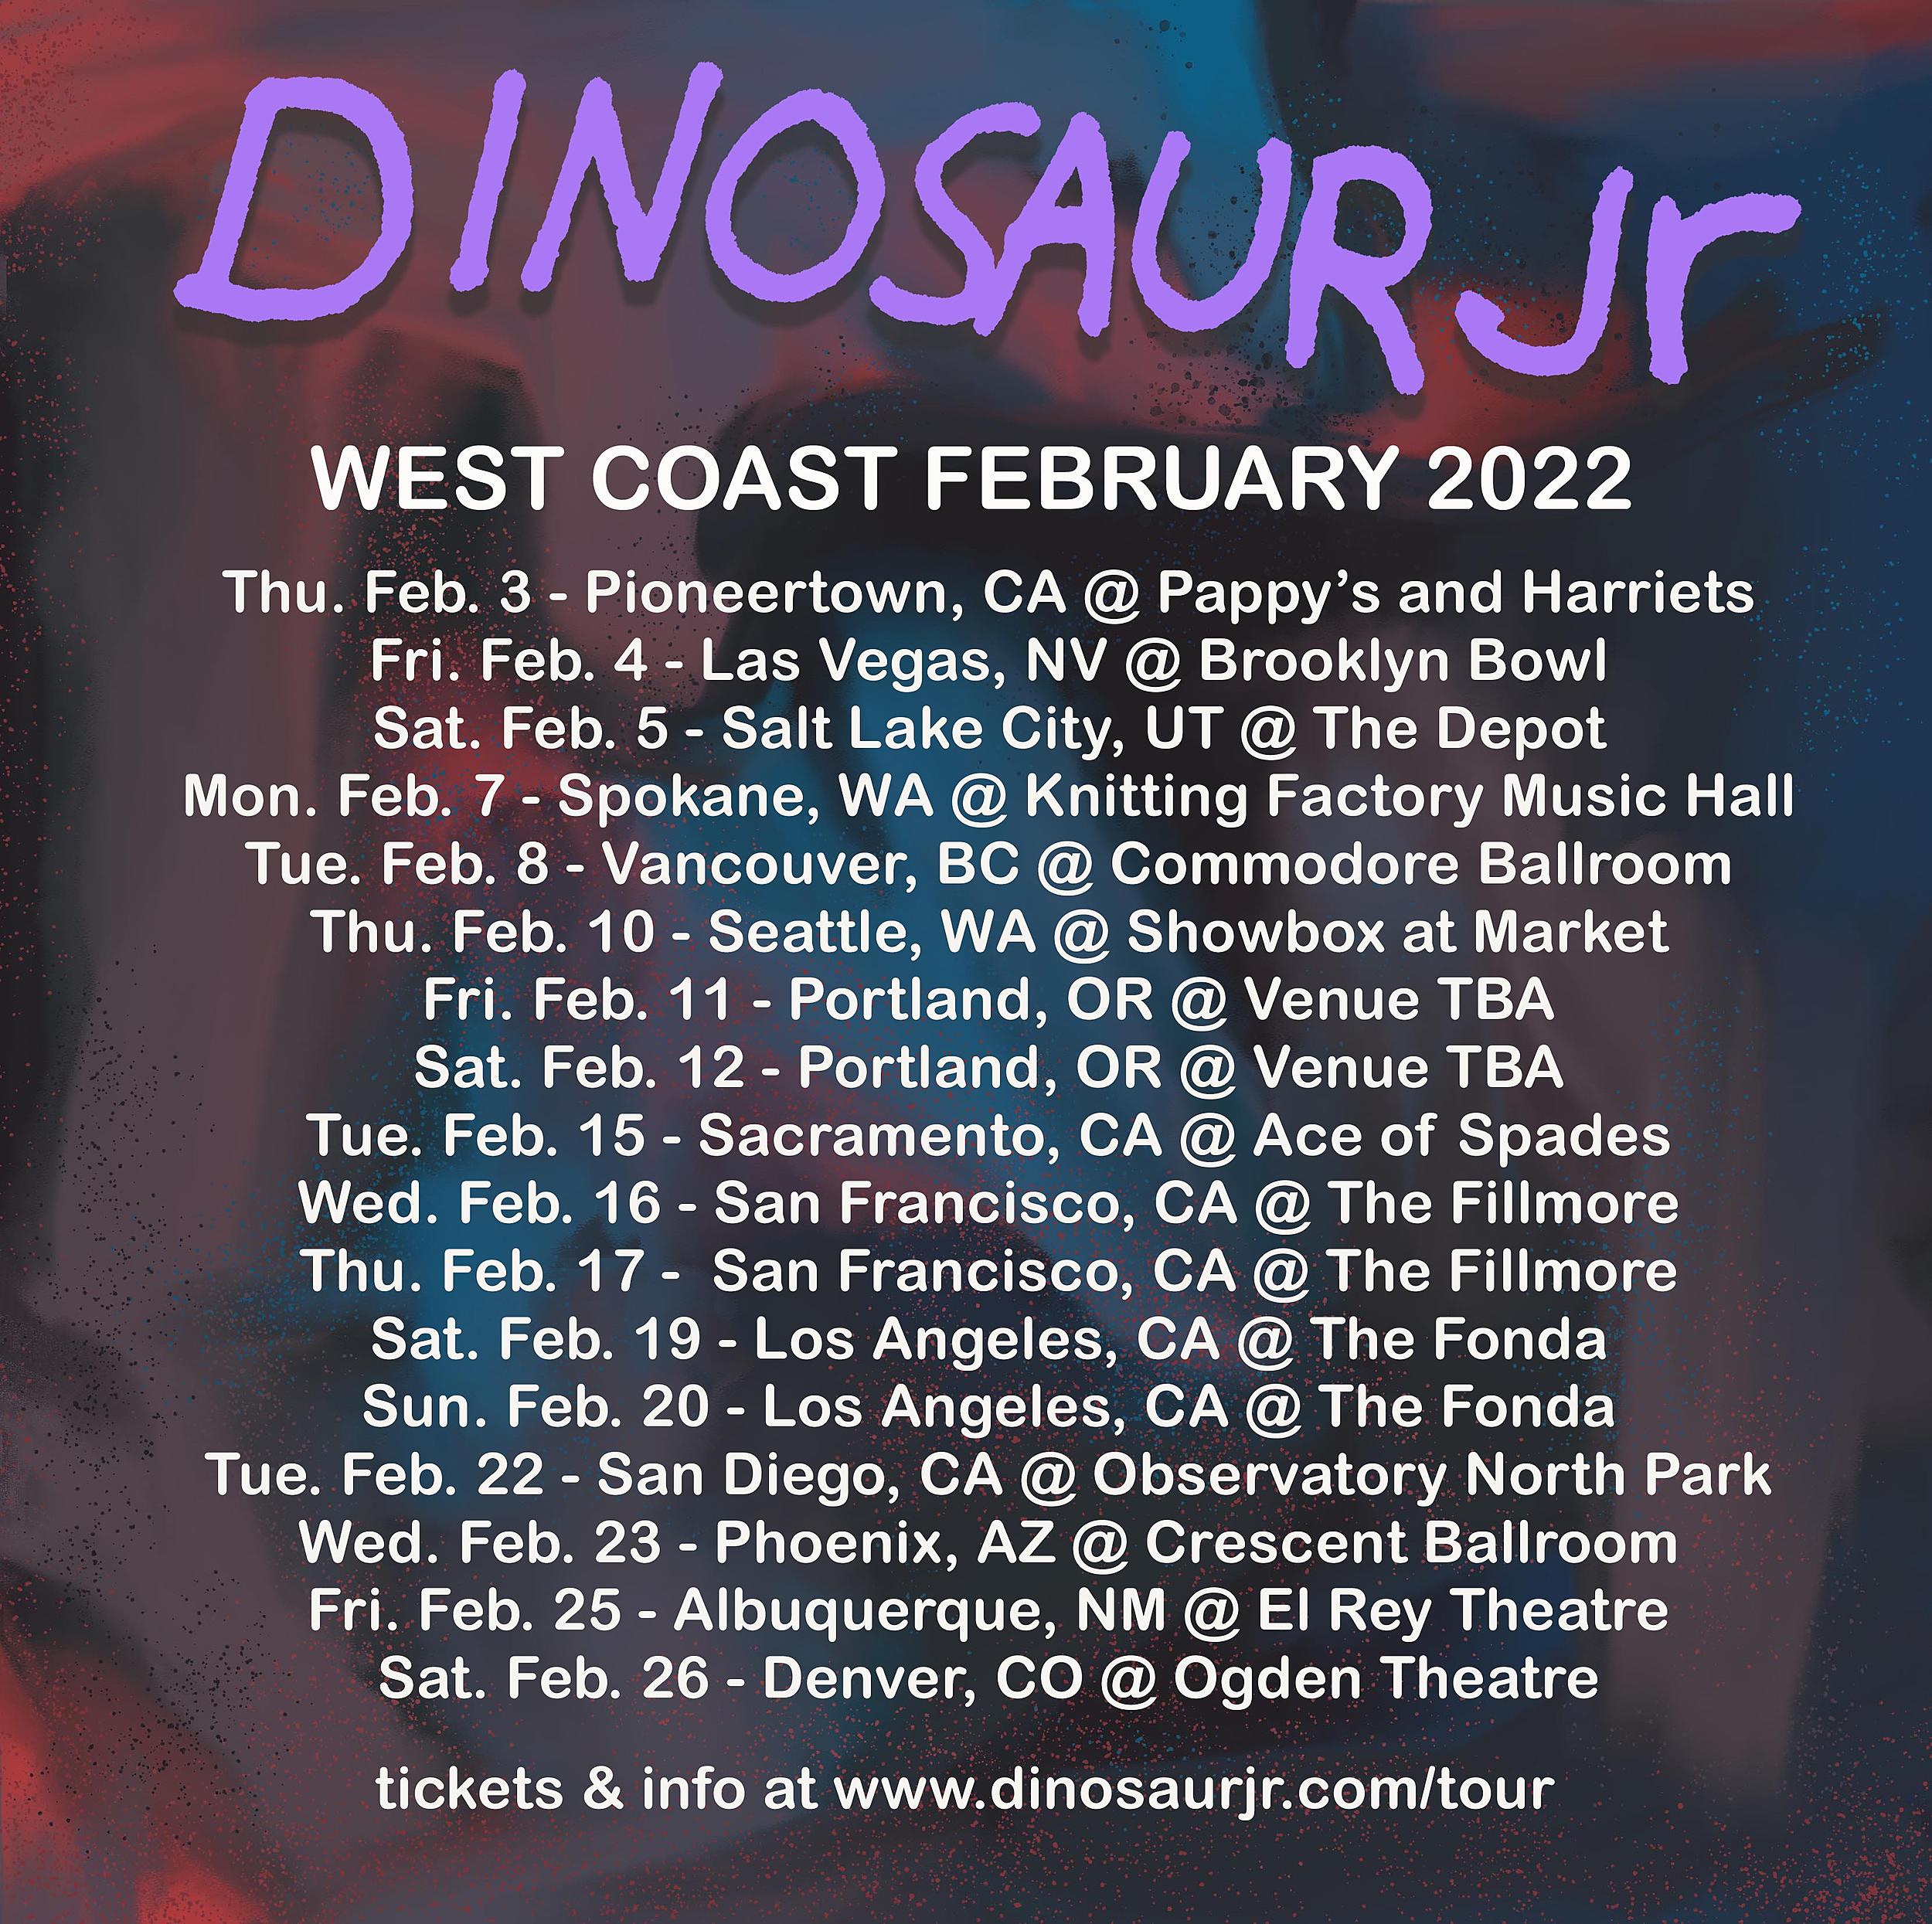 Dinosaur Jr announce rescheduled West Coast tour dates